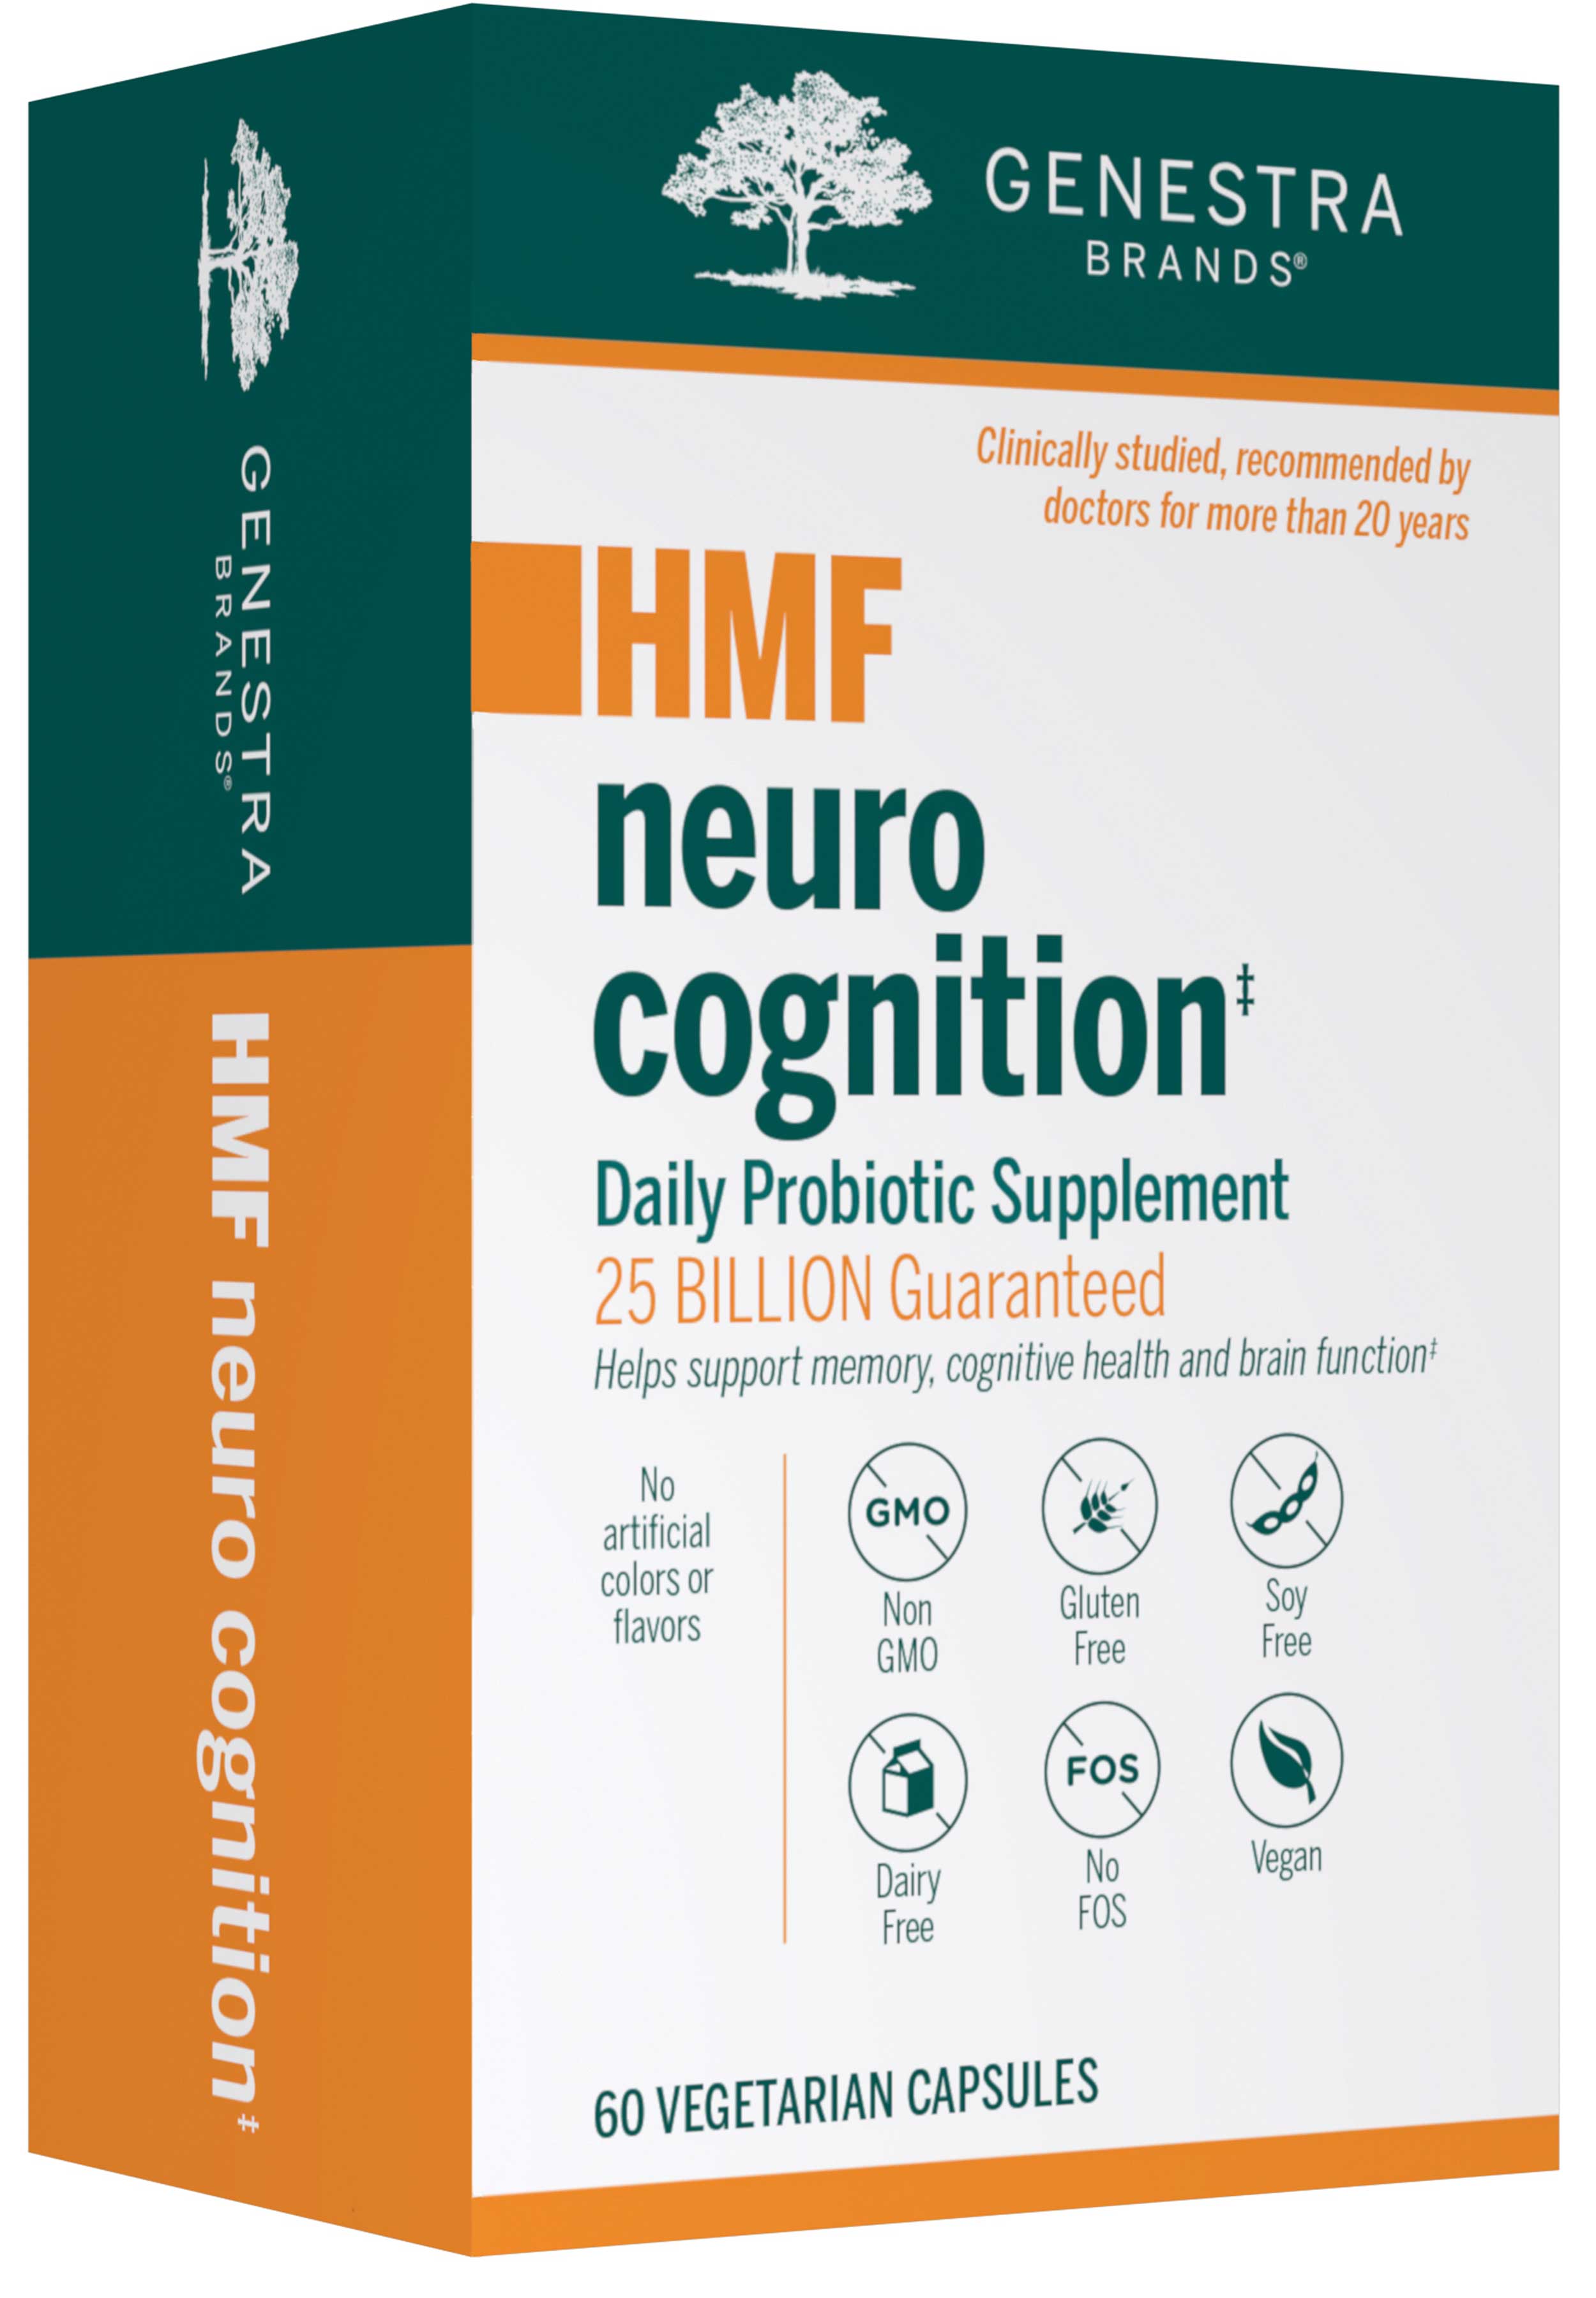 Genestra Brands HMF Neuro Cognition